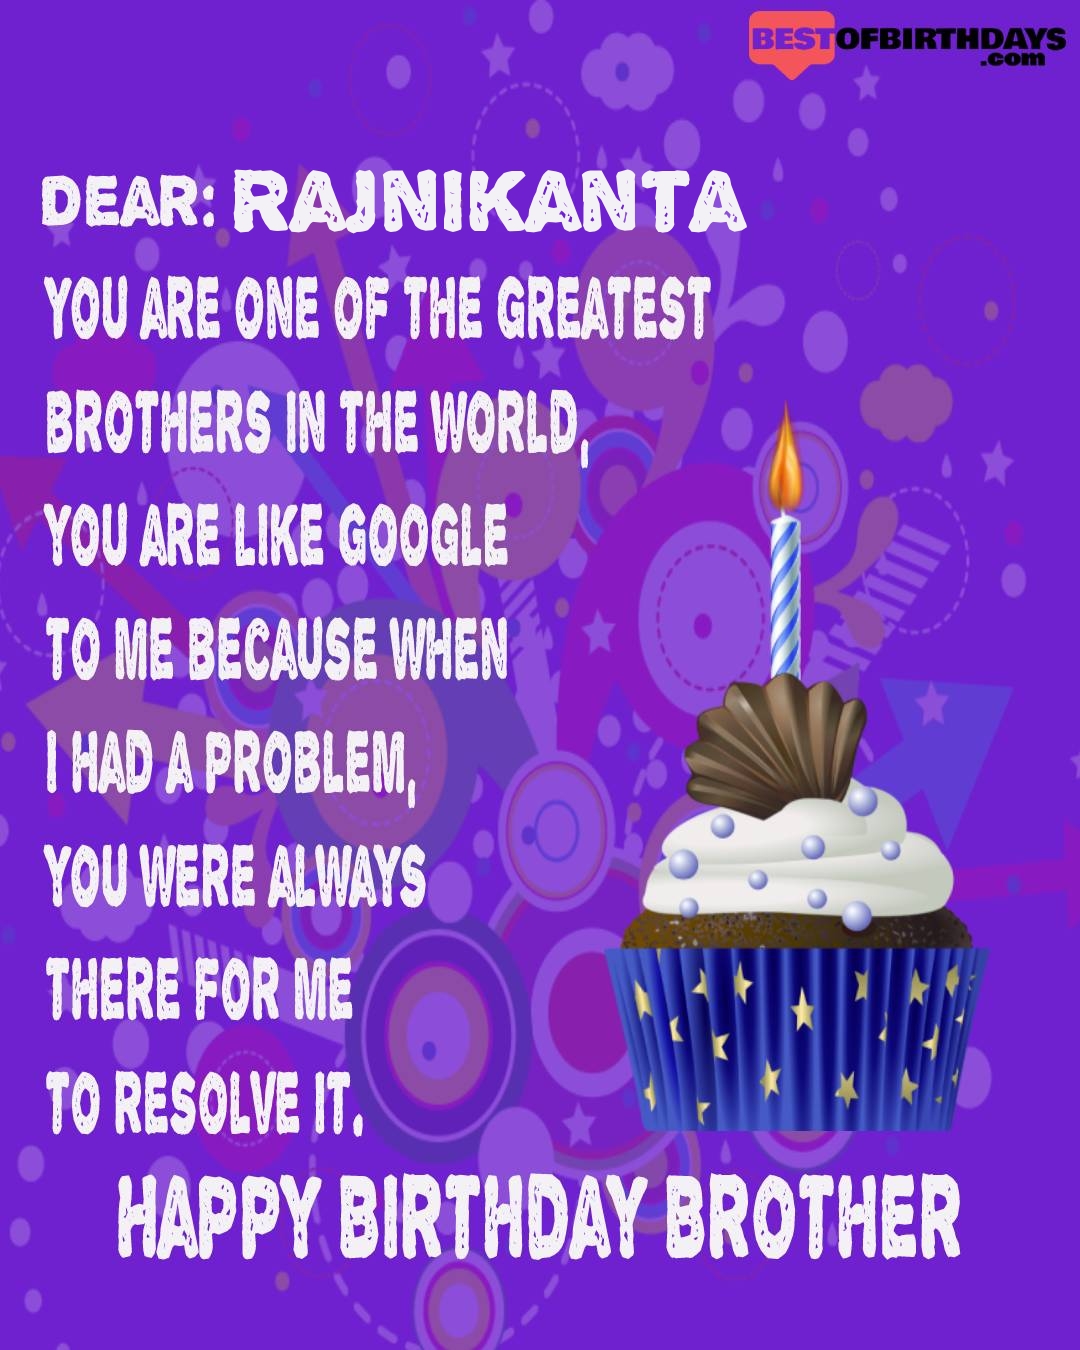 Happy birthday rajnikanta bhai brother bro